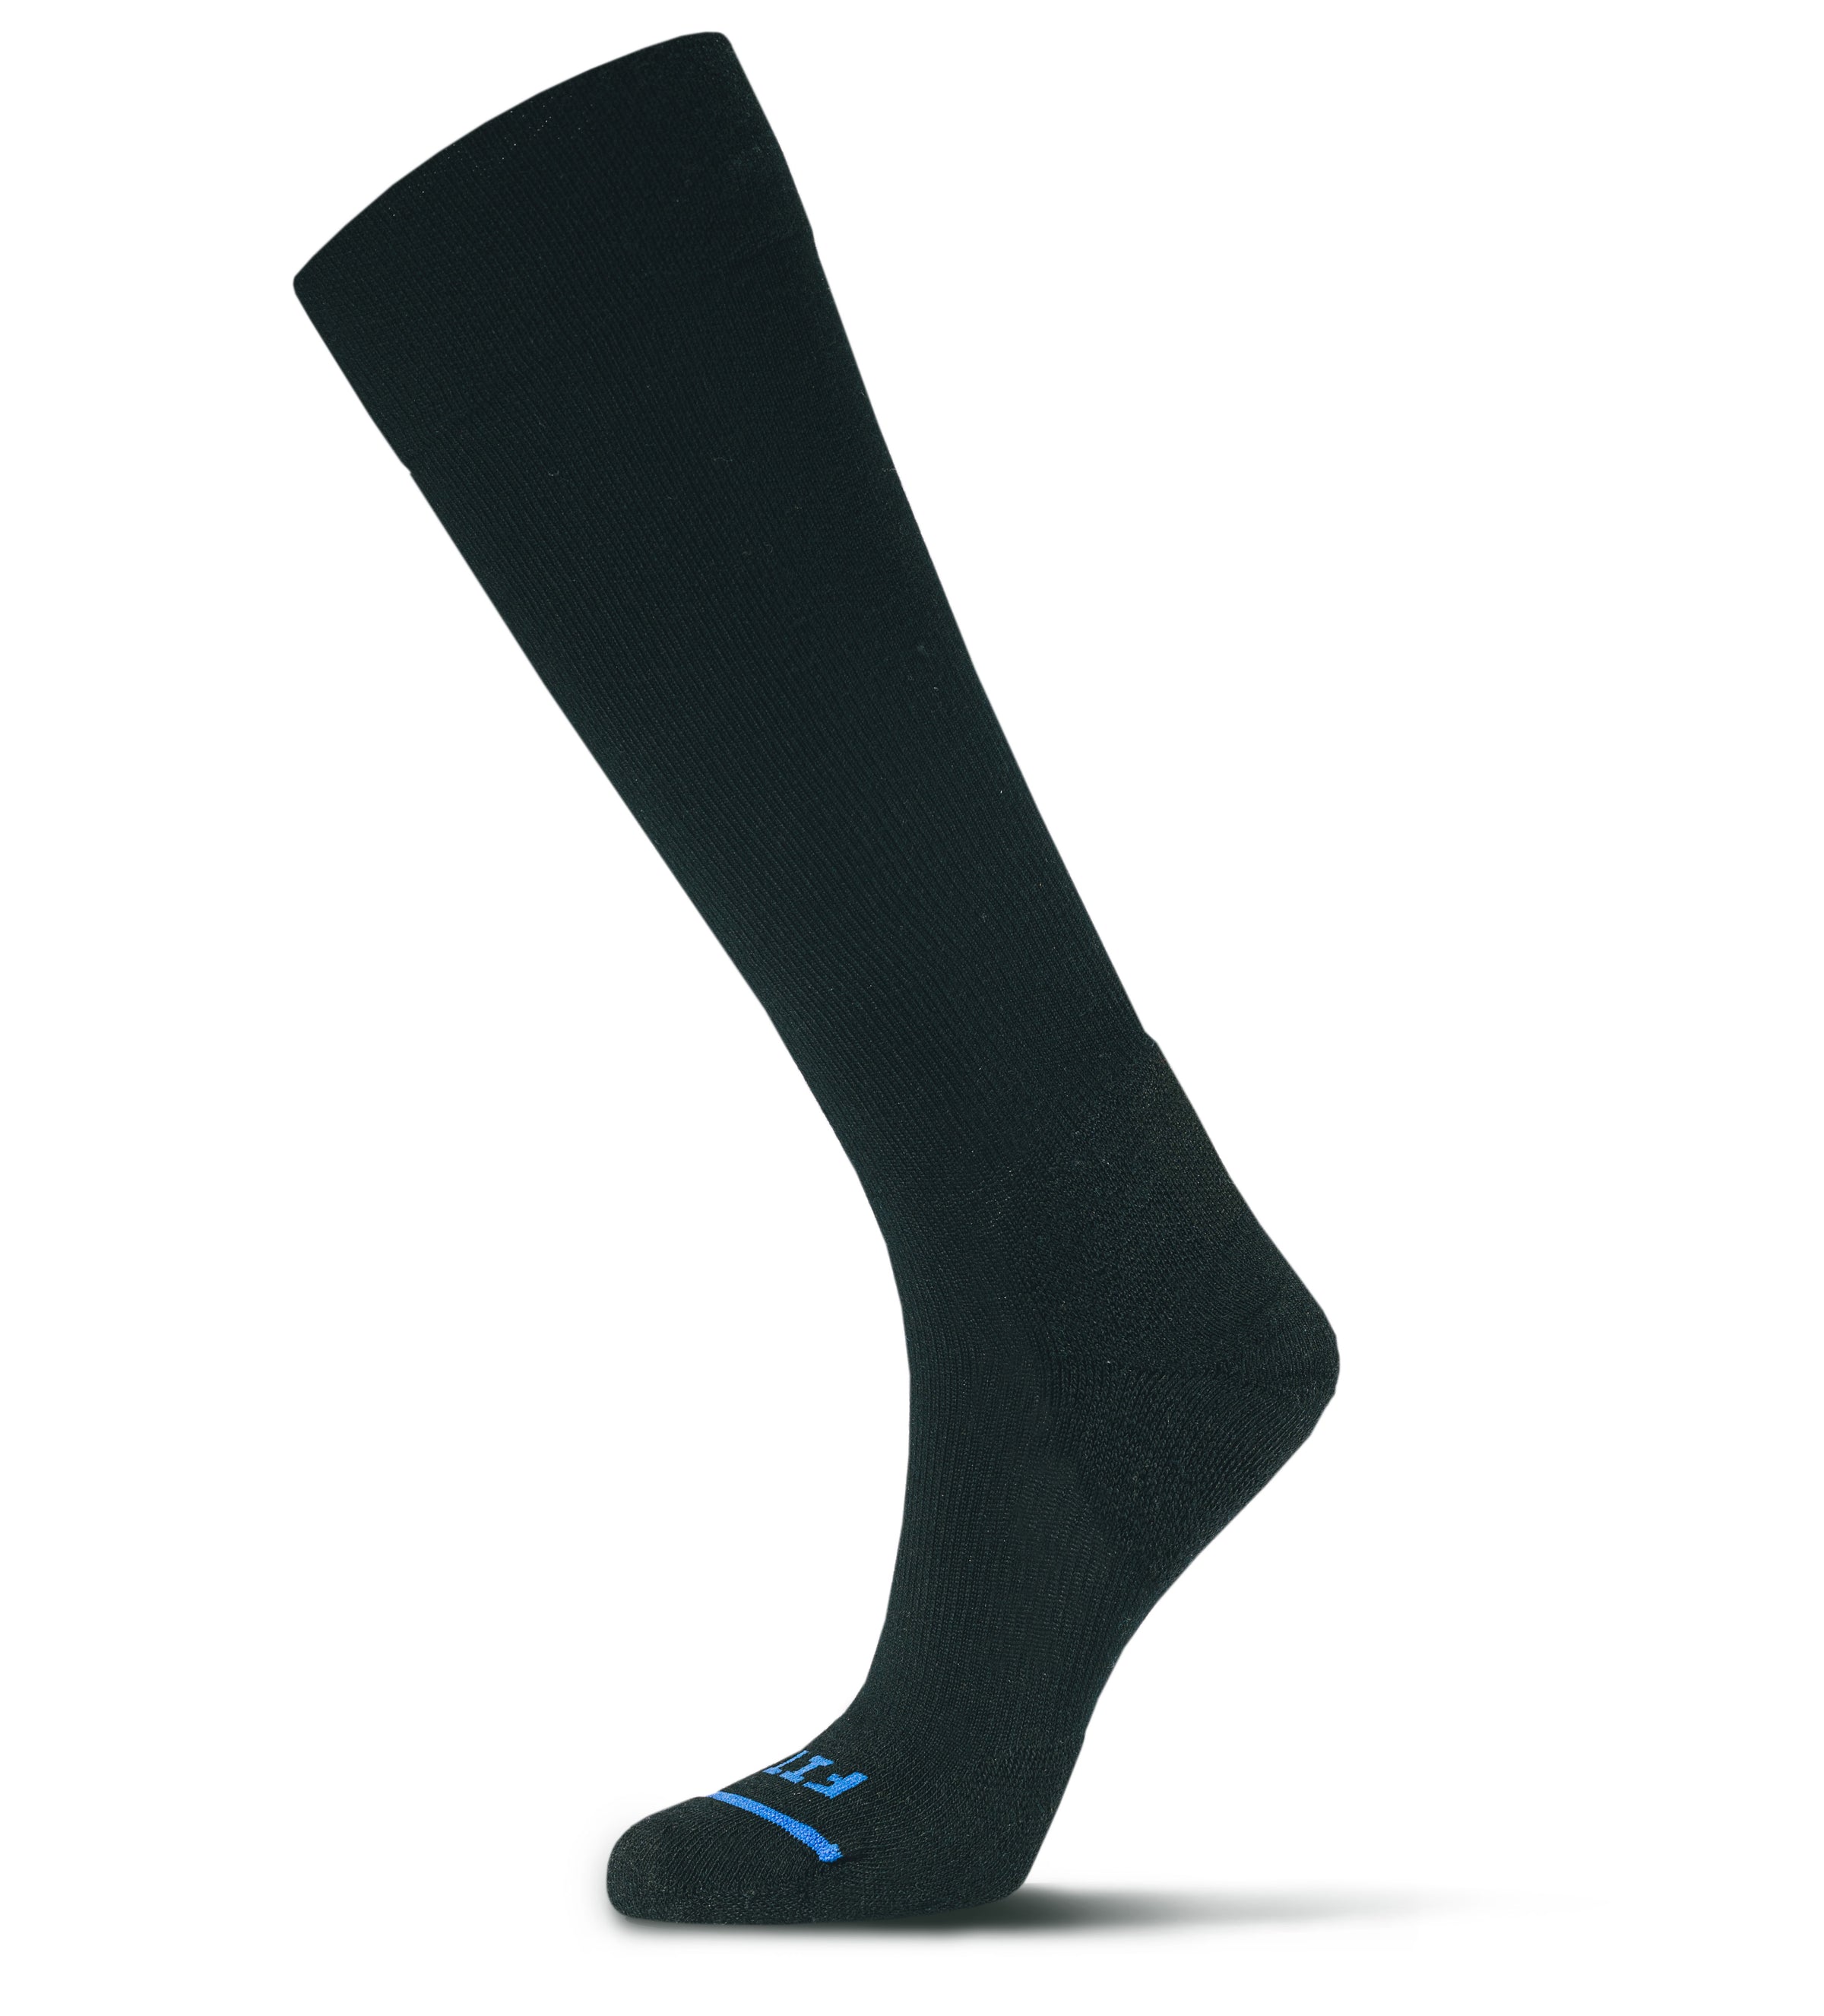 KuGinMa Compression Socks for Men and Women (3 Pairs) 20-30 mmhg